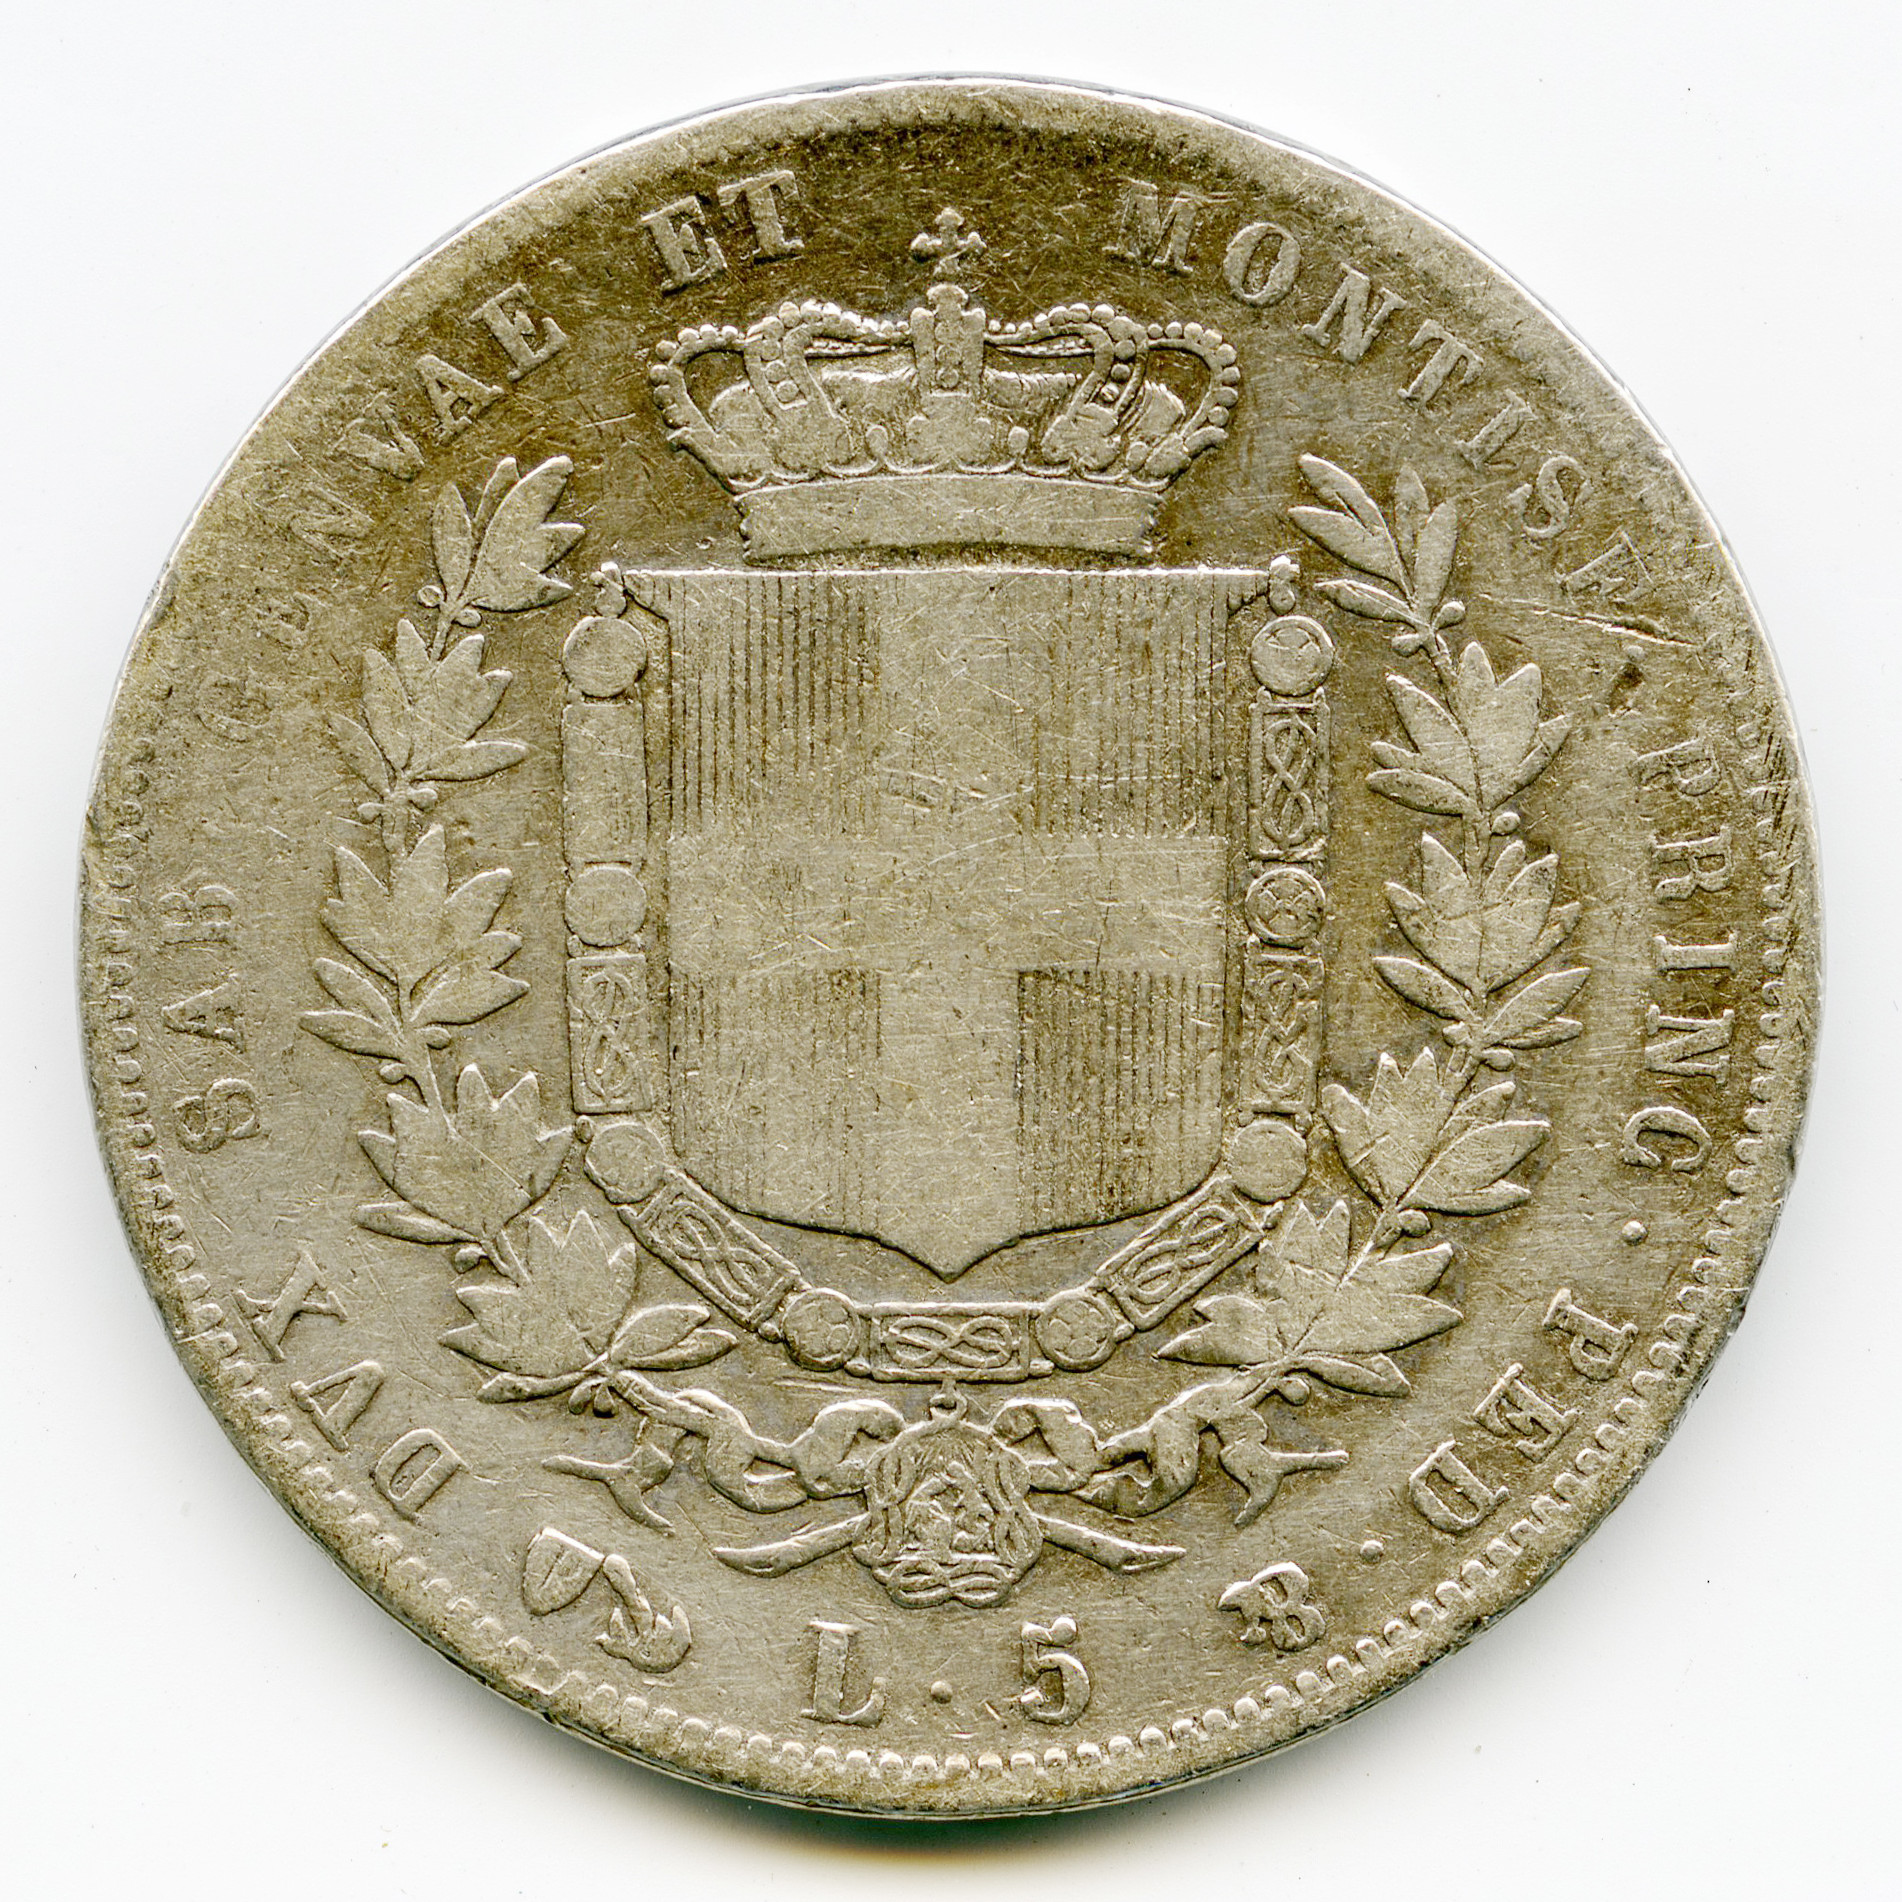 Italie - 5 Lire - 1852 - Gênes revers